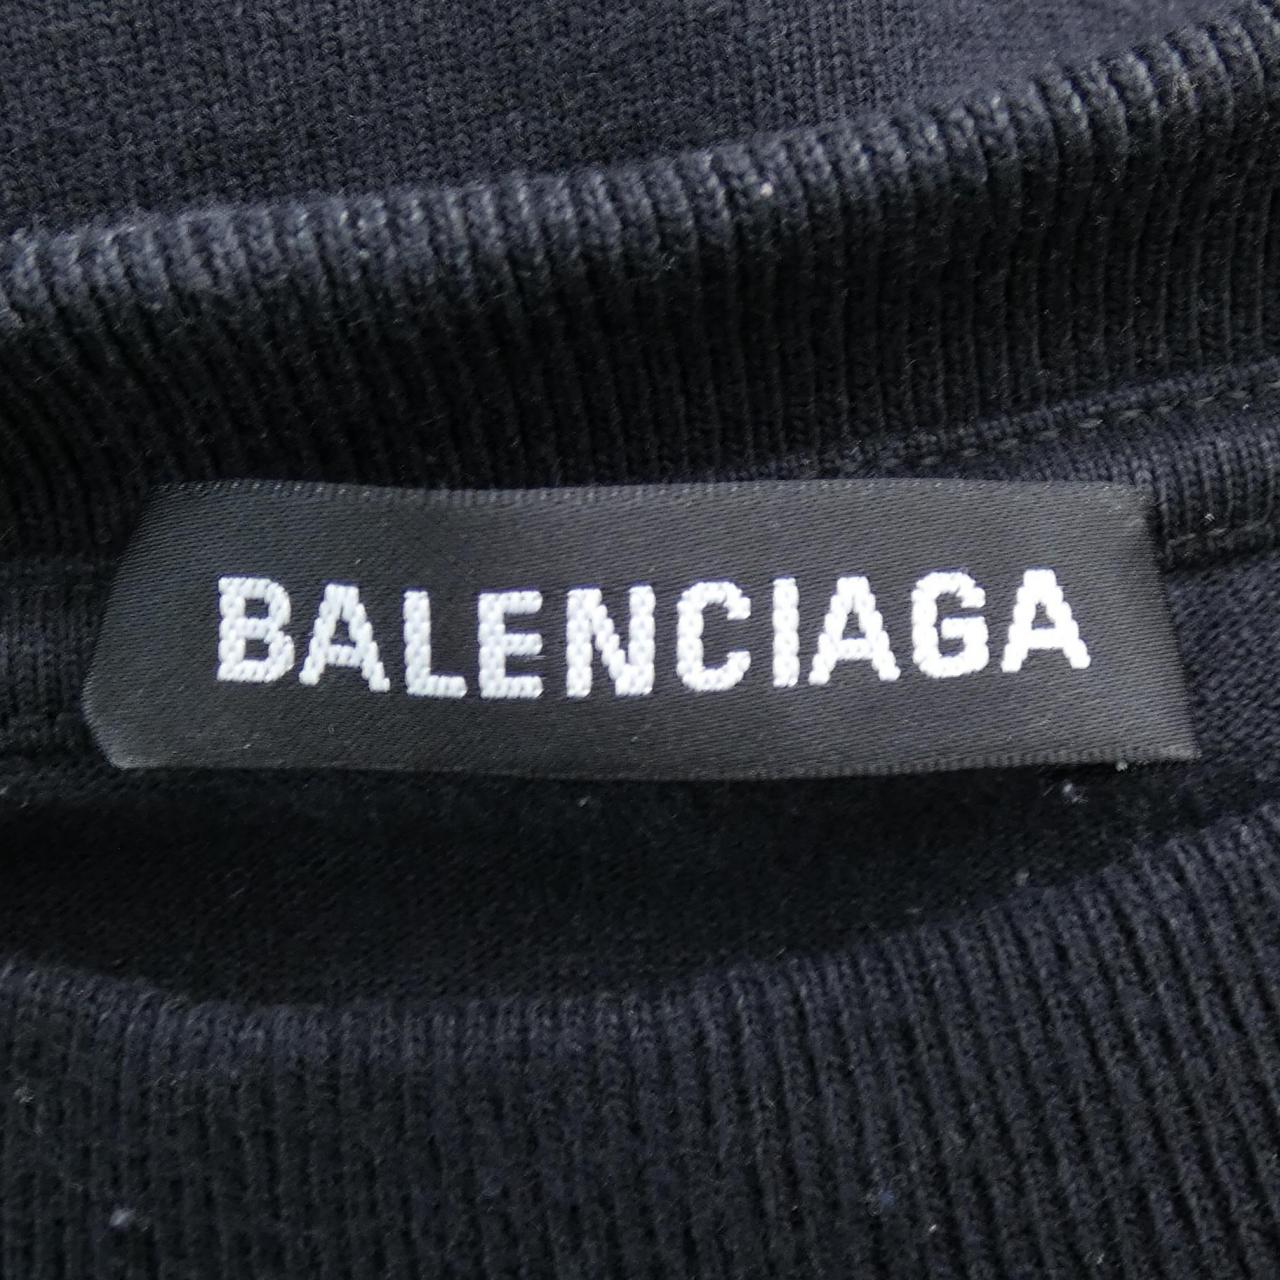 U BALENCIAGA巴伦西亚加上衣